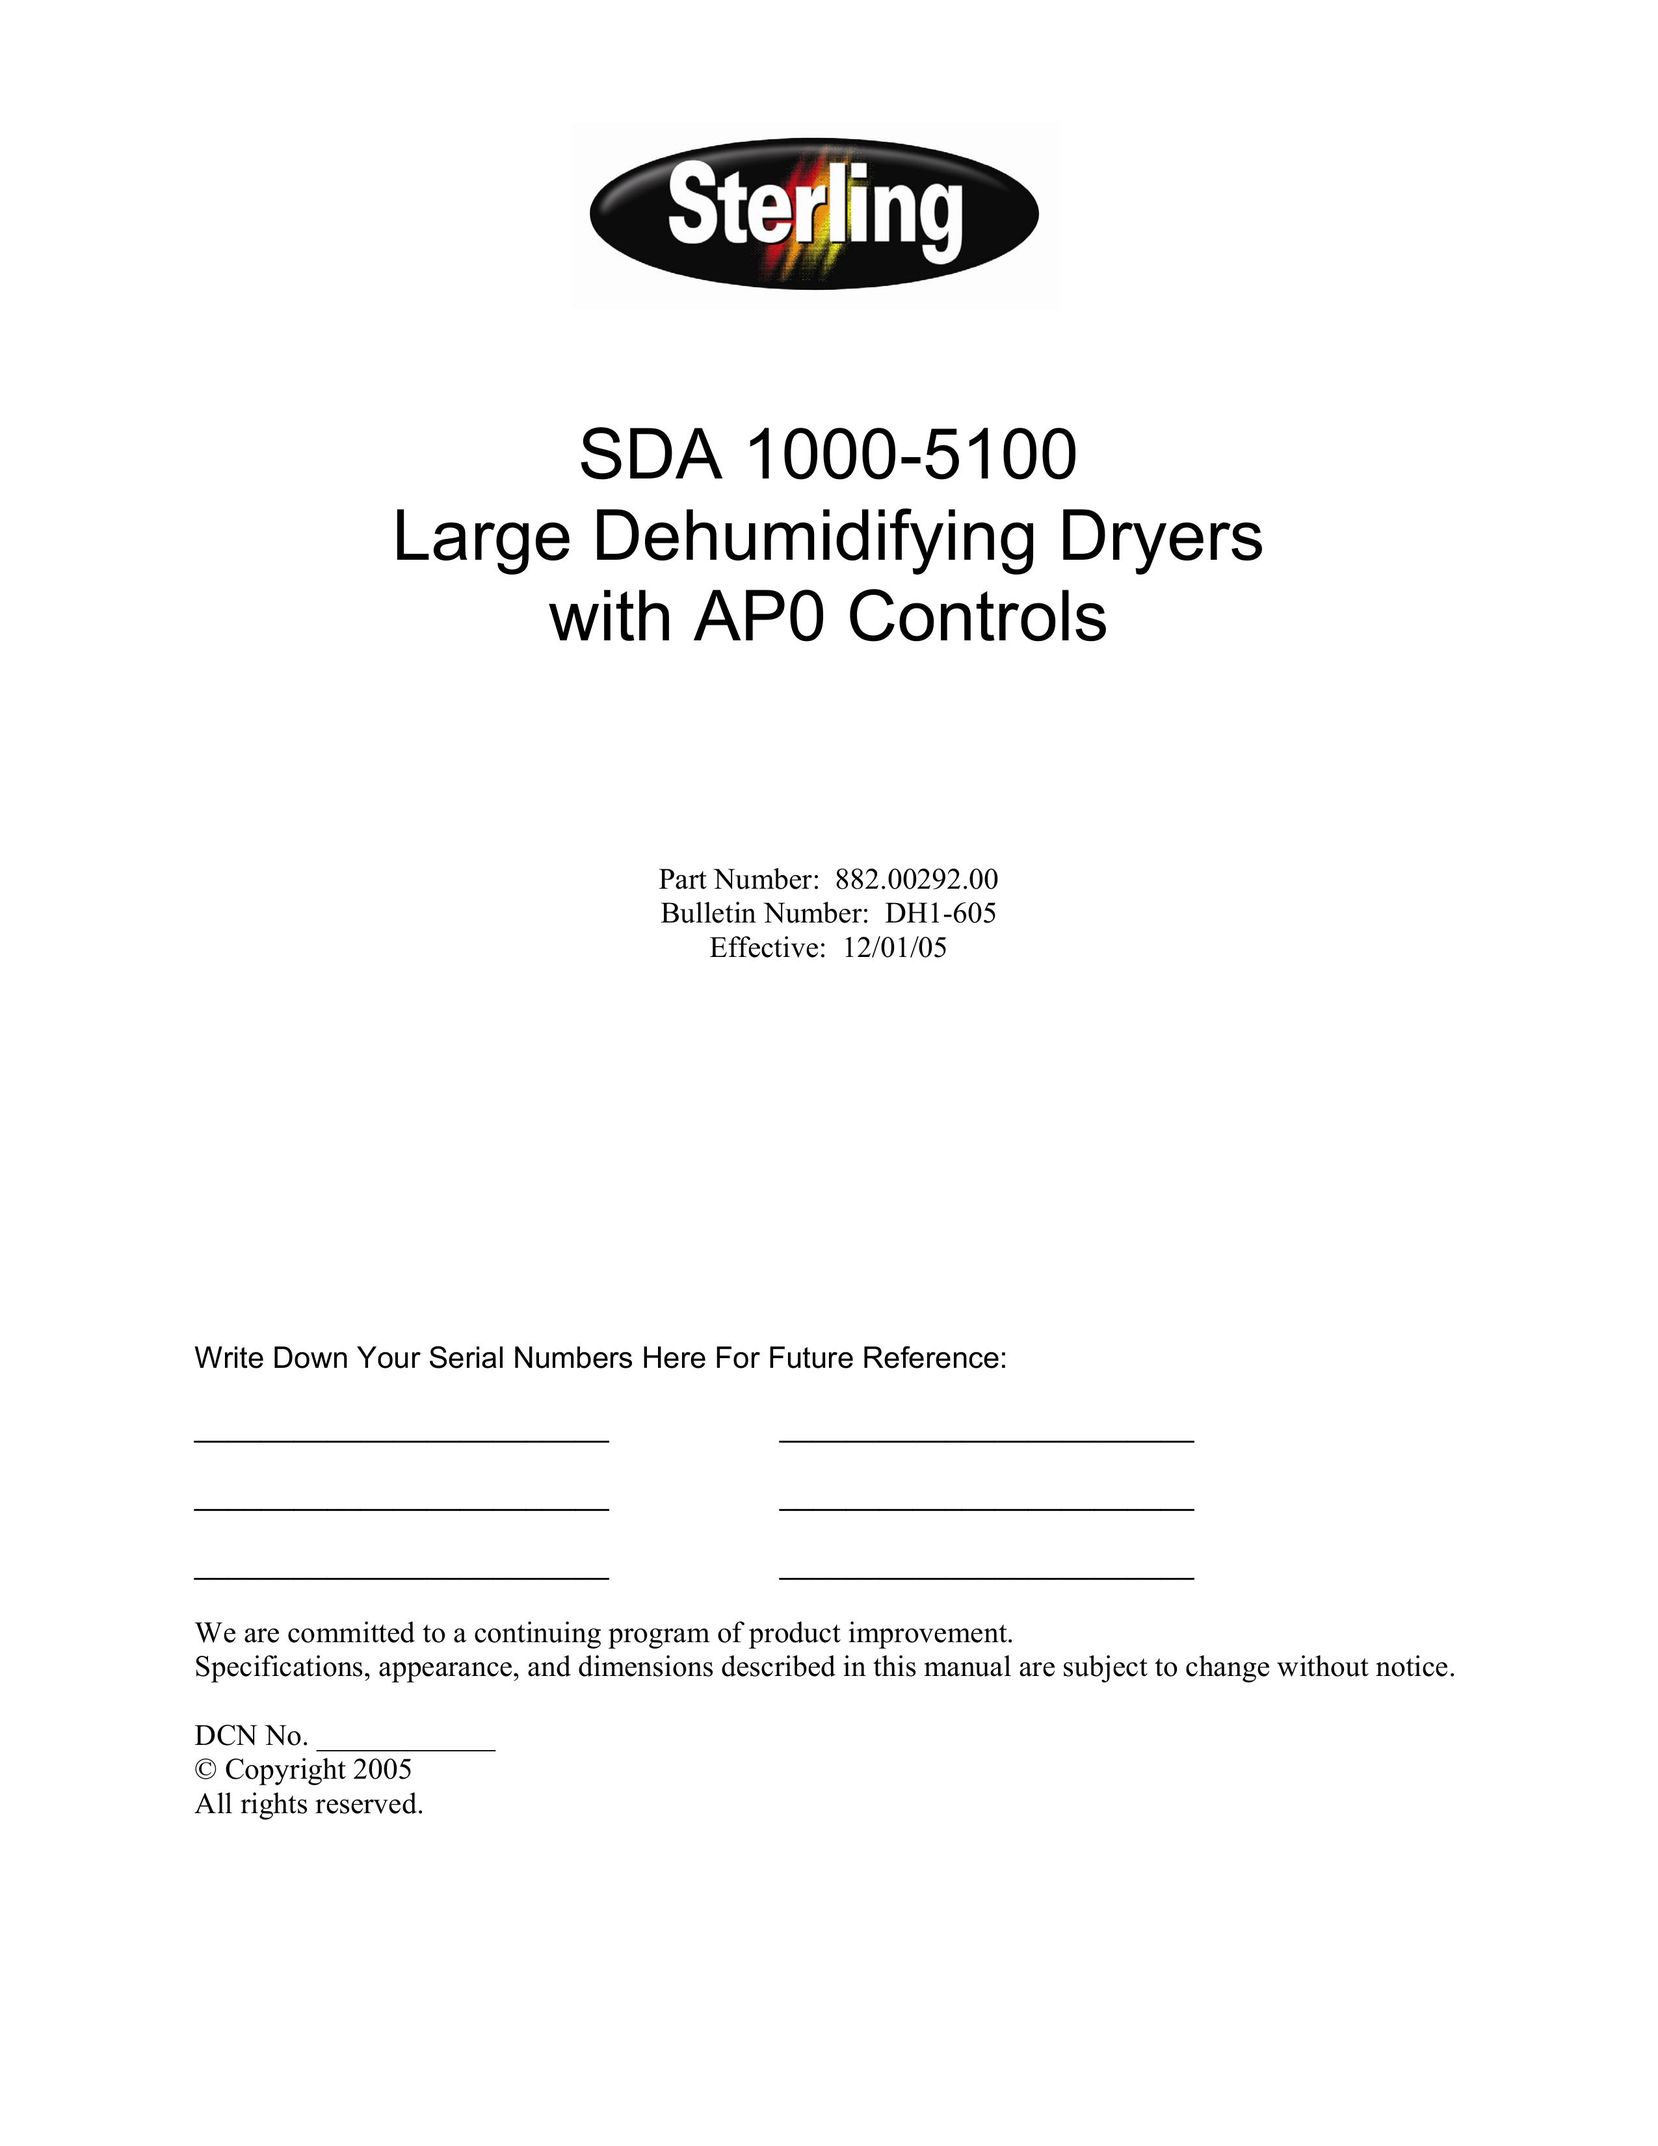 Sterling SDA 1000-5100 Dehumidifier User Manual